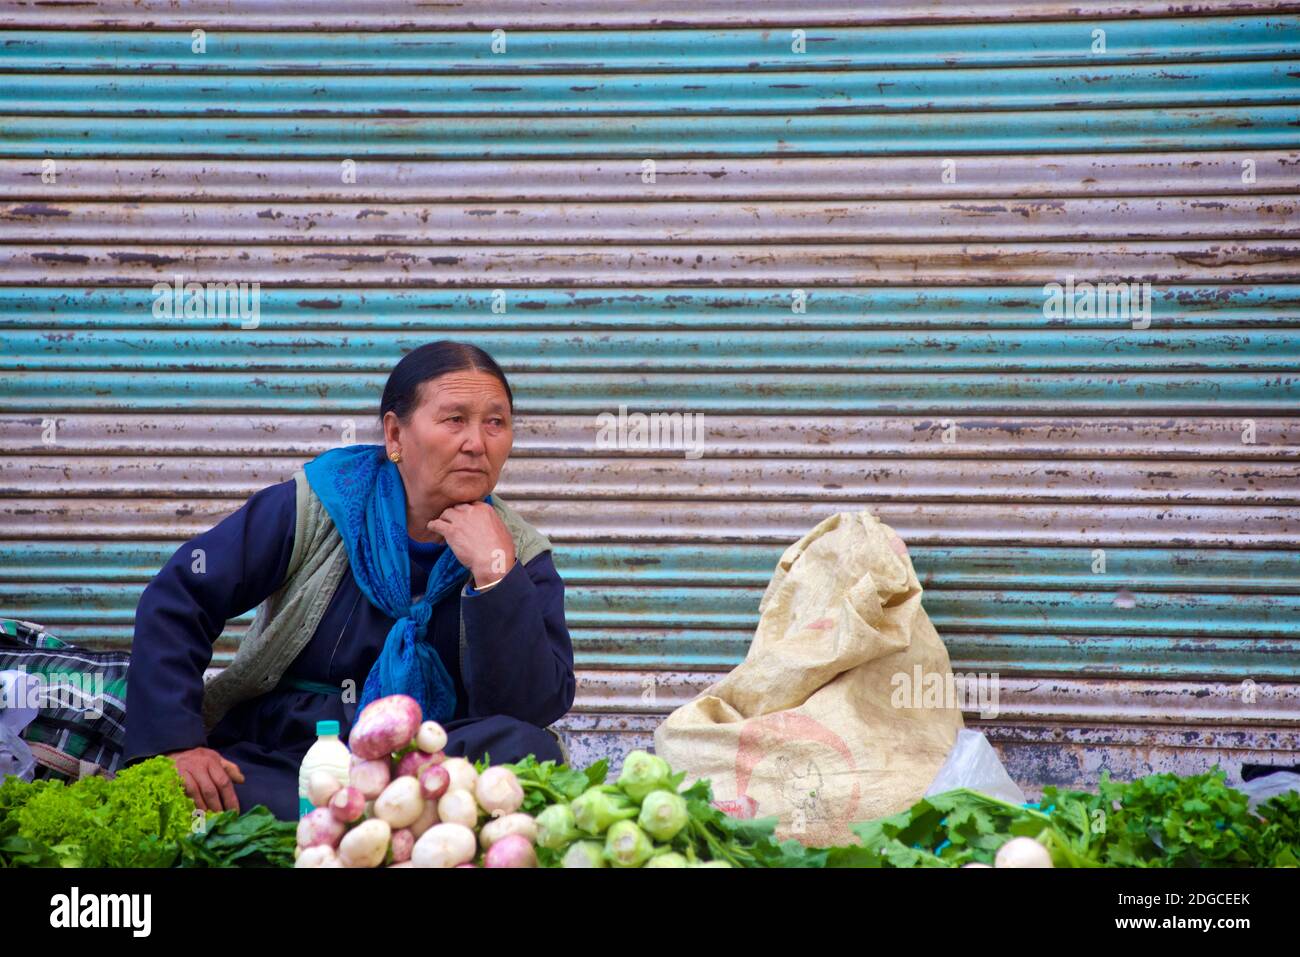 Leh, Ladakh, Jammu and Kashmir, IndiaPortrait of a friendly Ladakhi woman in local attire selling vegetables at market, Leh, Jammu and Kashmir, India Stock Photo